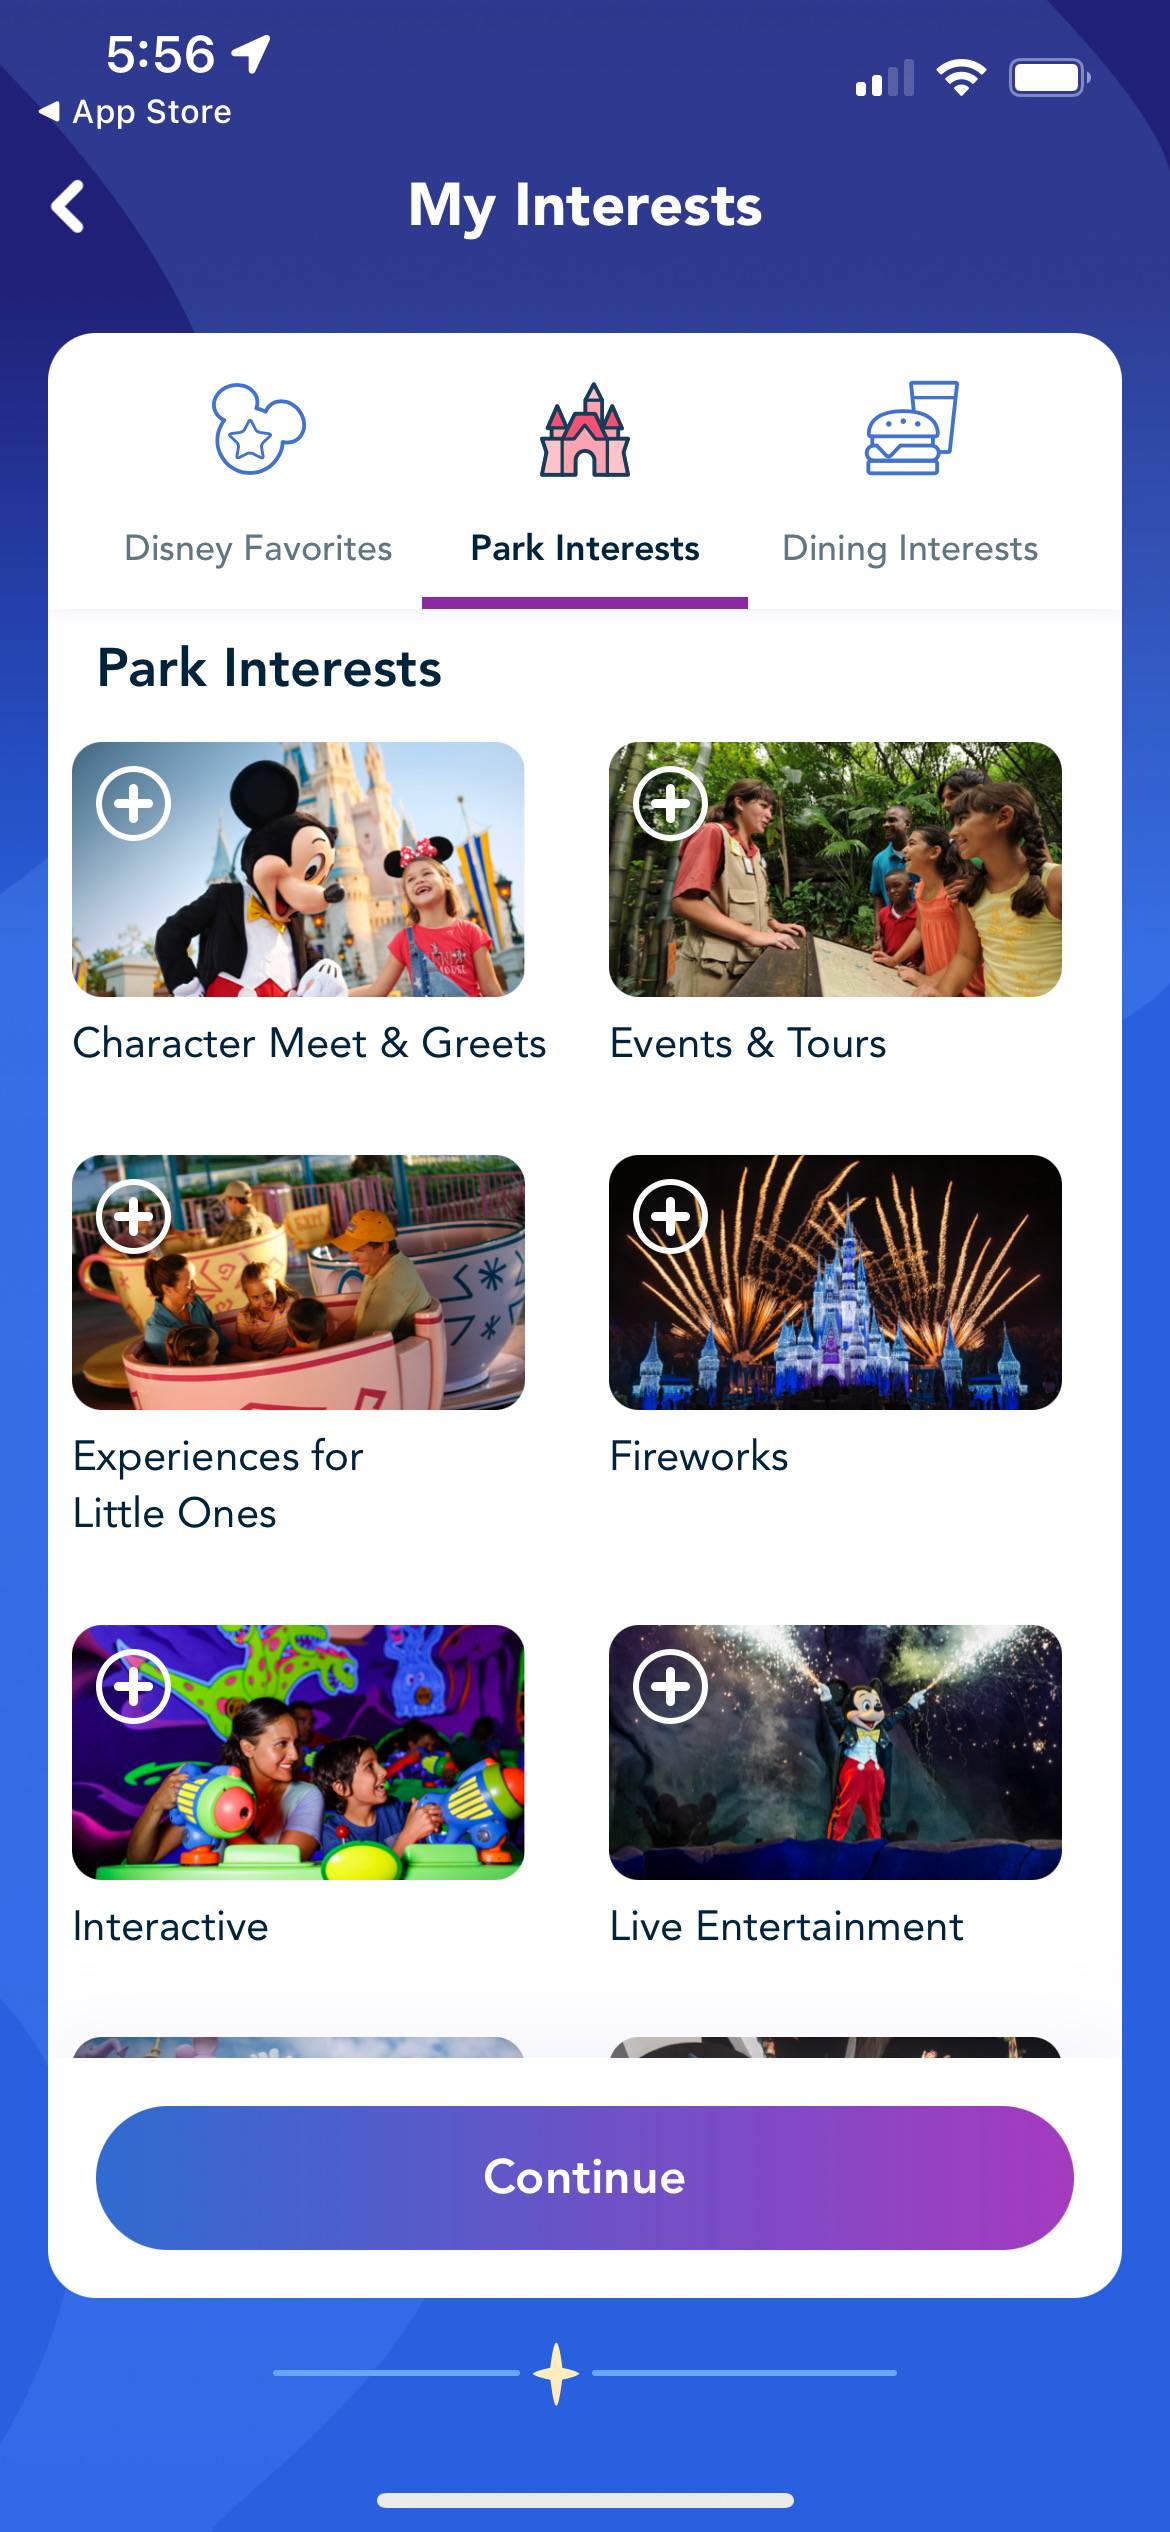 Screenshots - Disney Genie day planning - 'My Day' setup